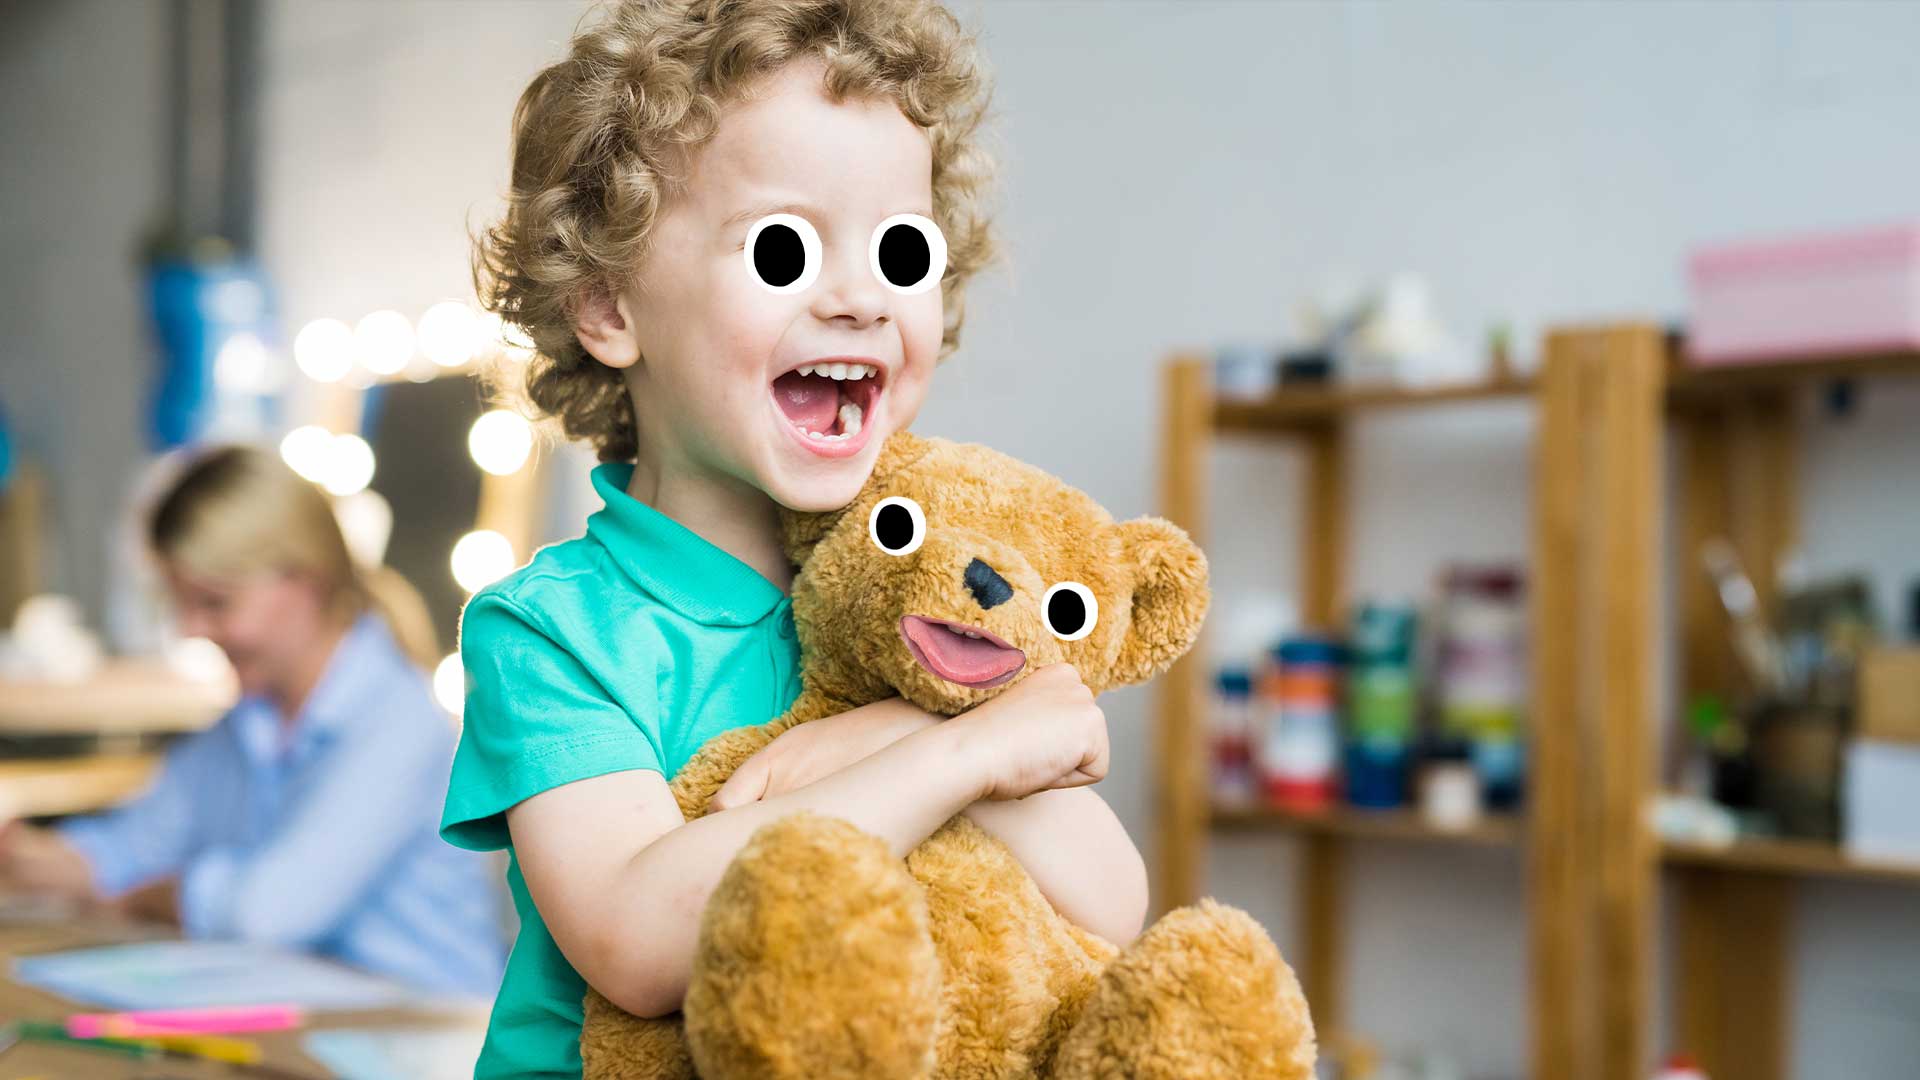 A boy holding a teddy bear